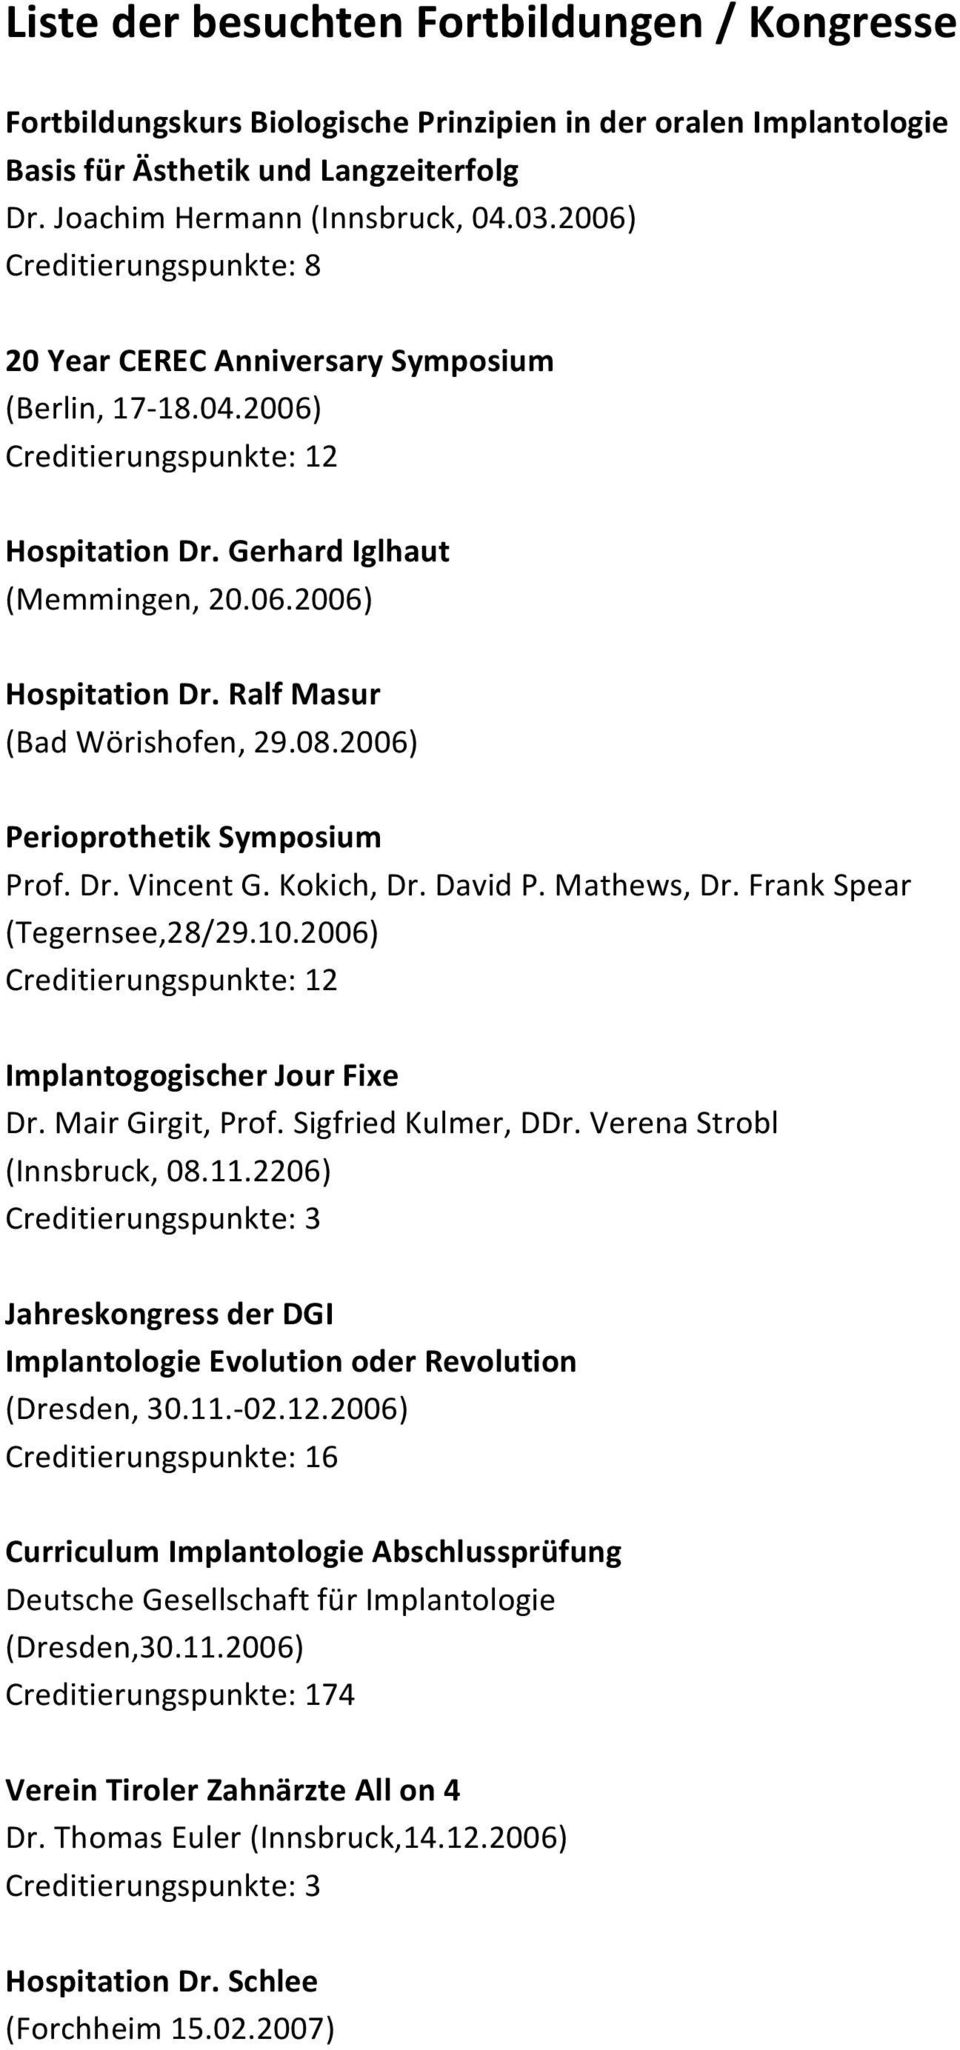 2006) Perioprothetik Symposium Prof. Dr. Vincent G. Kokich, Dr. David P. Mathews, Dr. Frank Spear (Tegernsee,28/29.10.2006) Creditierungspunkte: 12 Implantogogischer Jour Fixe Dr. Mair Girgit, Prof.